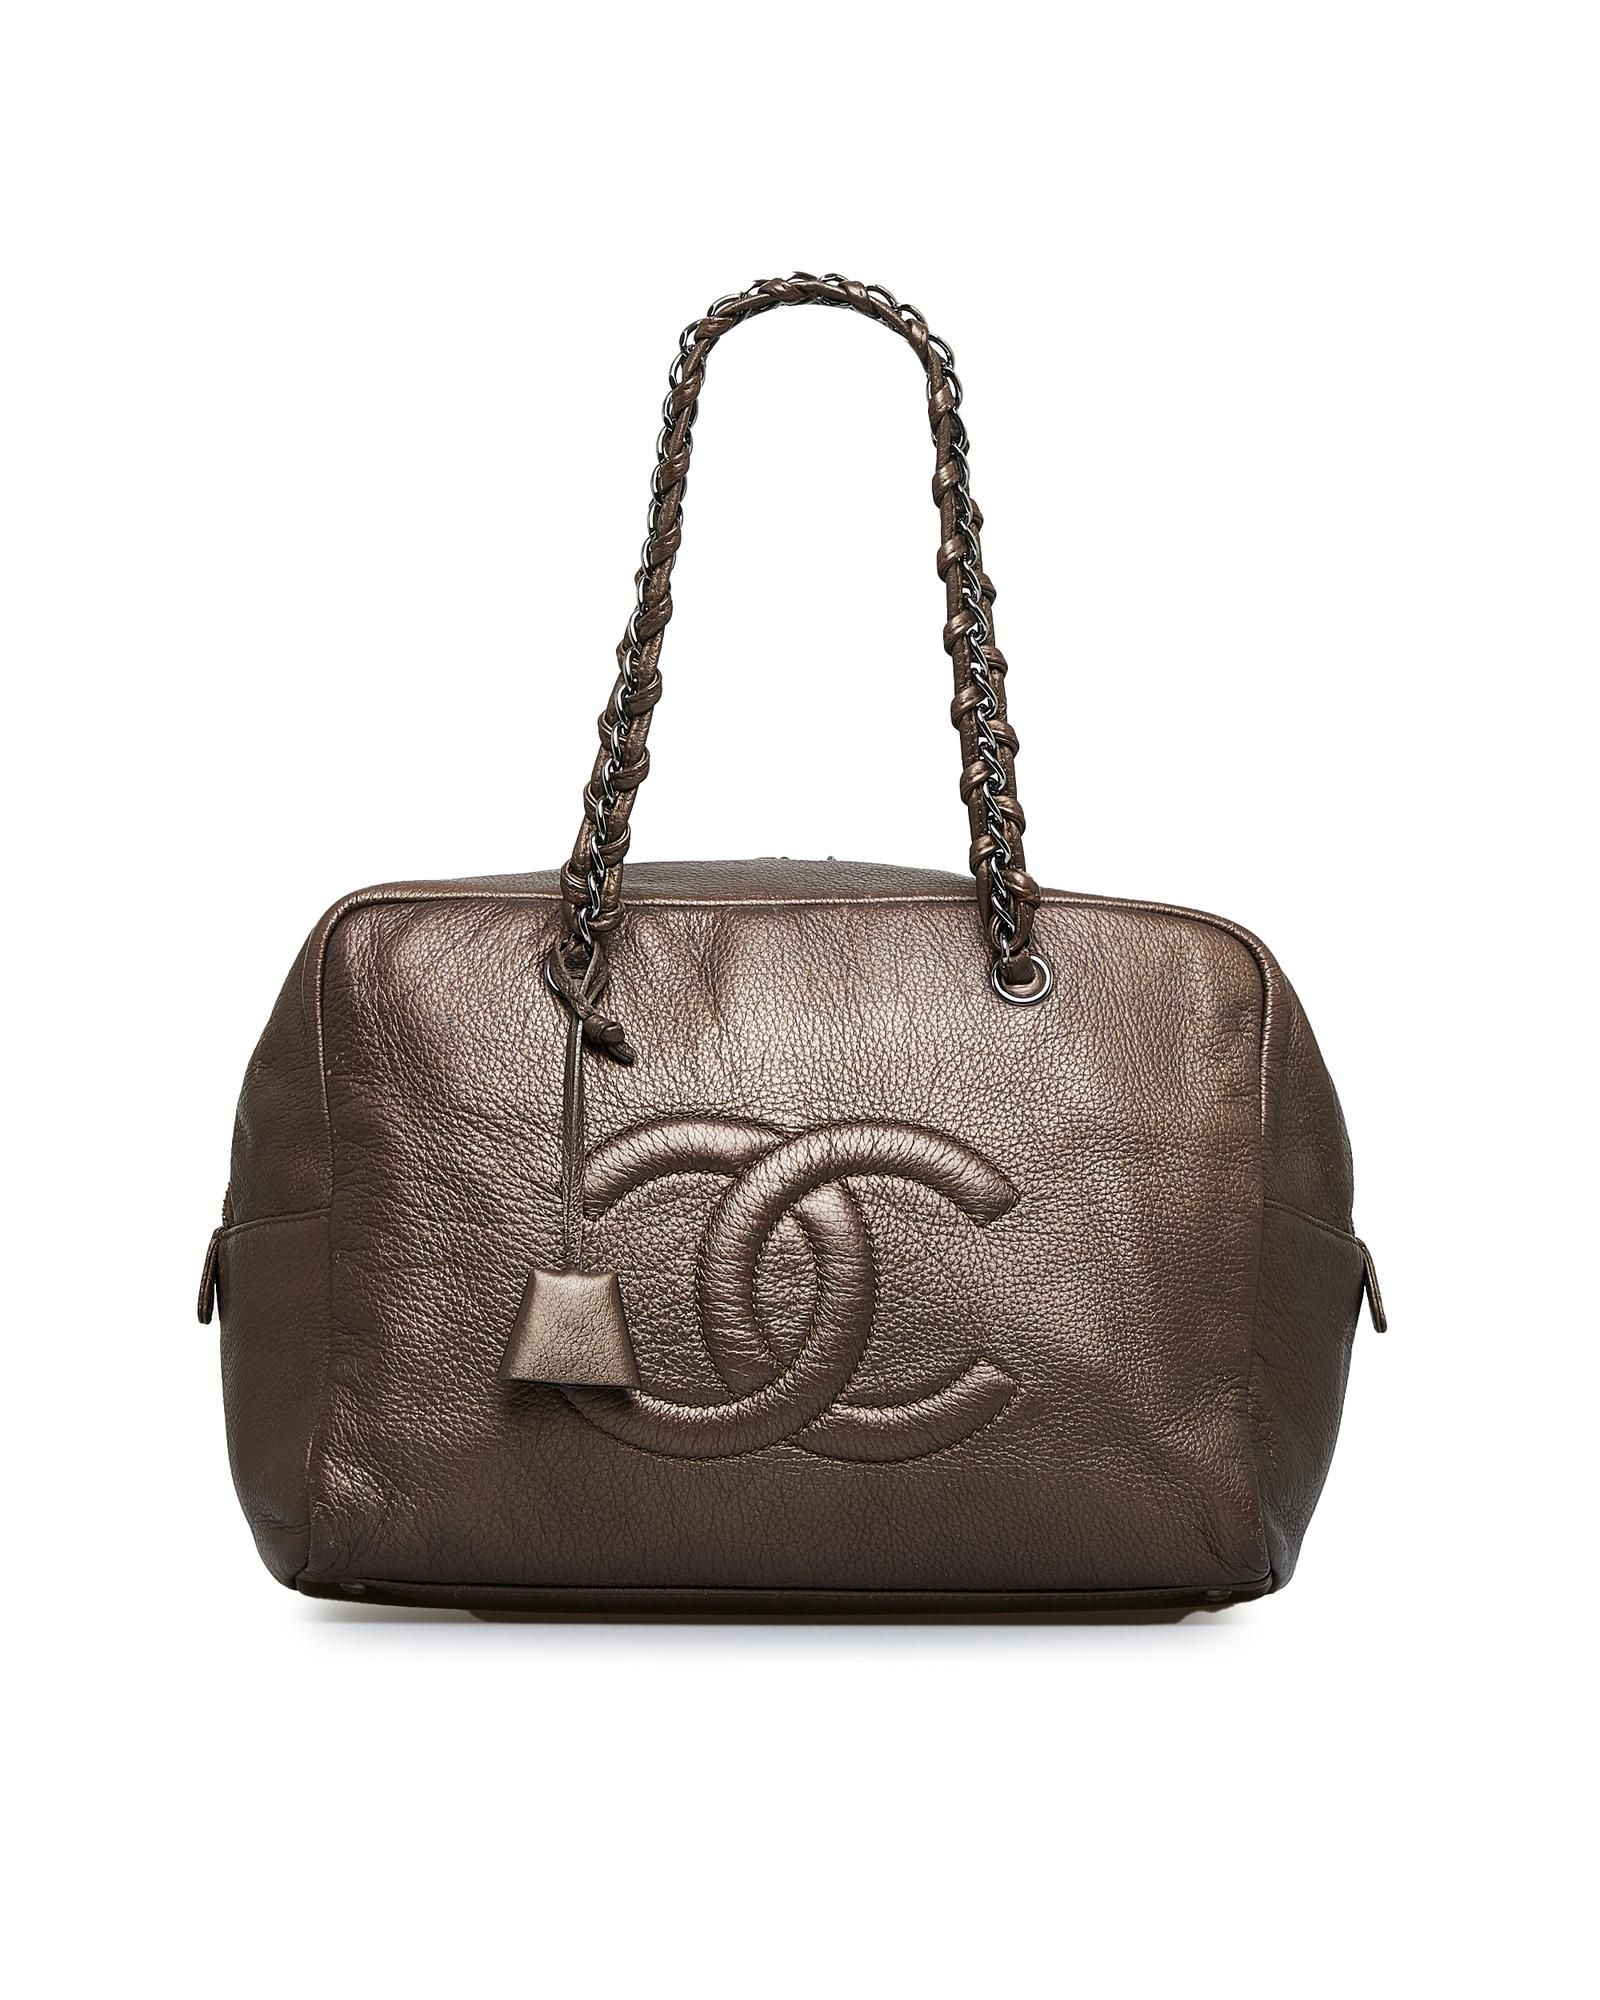 Chanel CC Chain Shoulder Bag